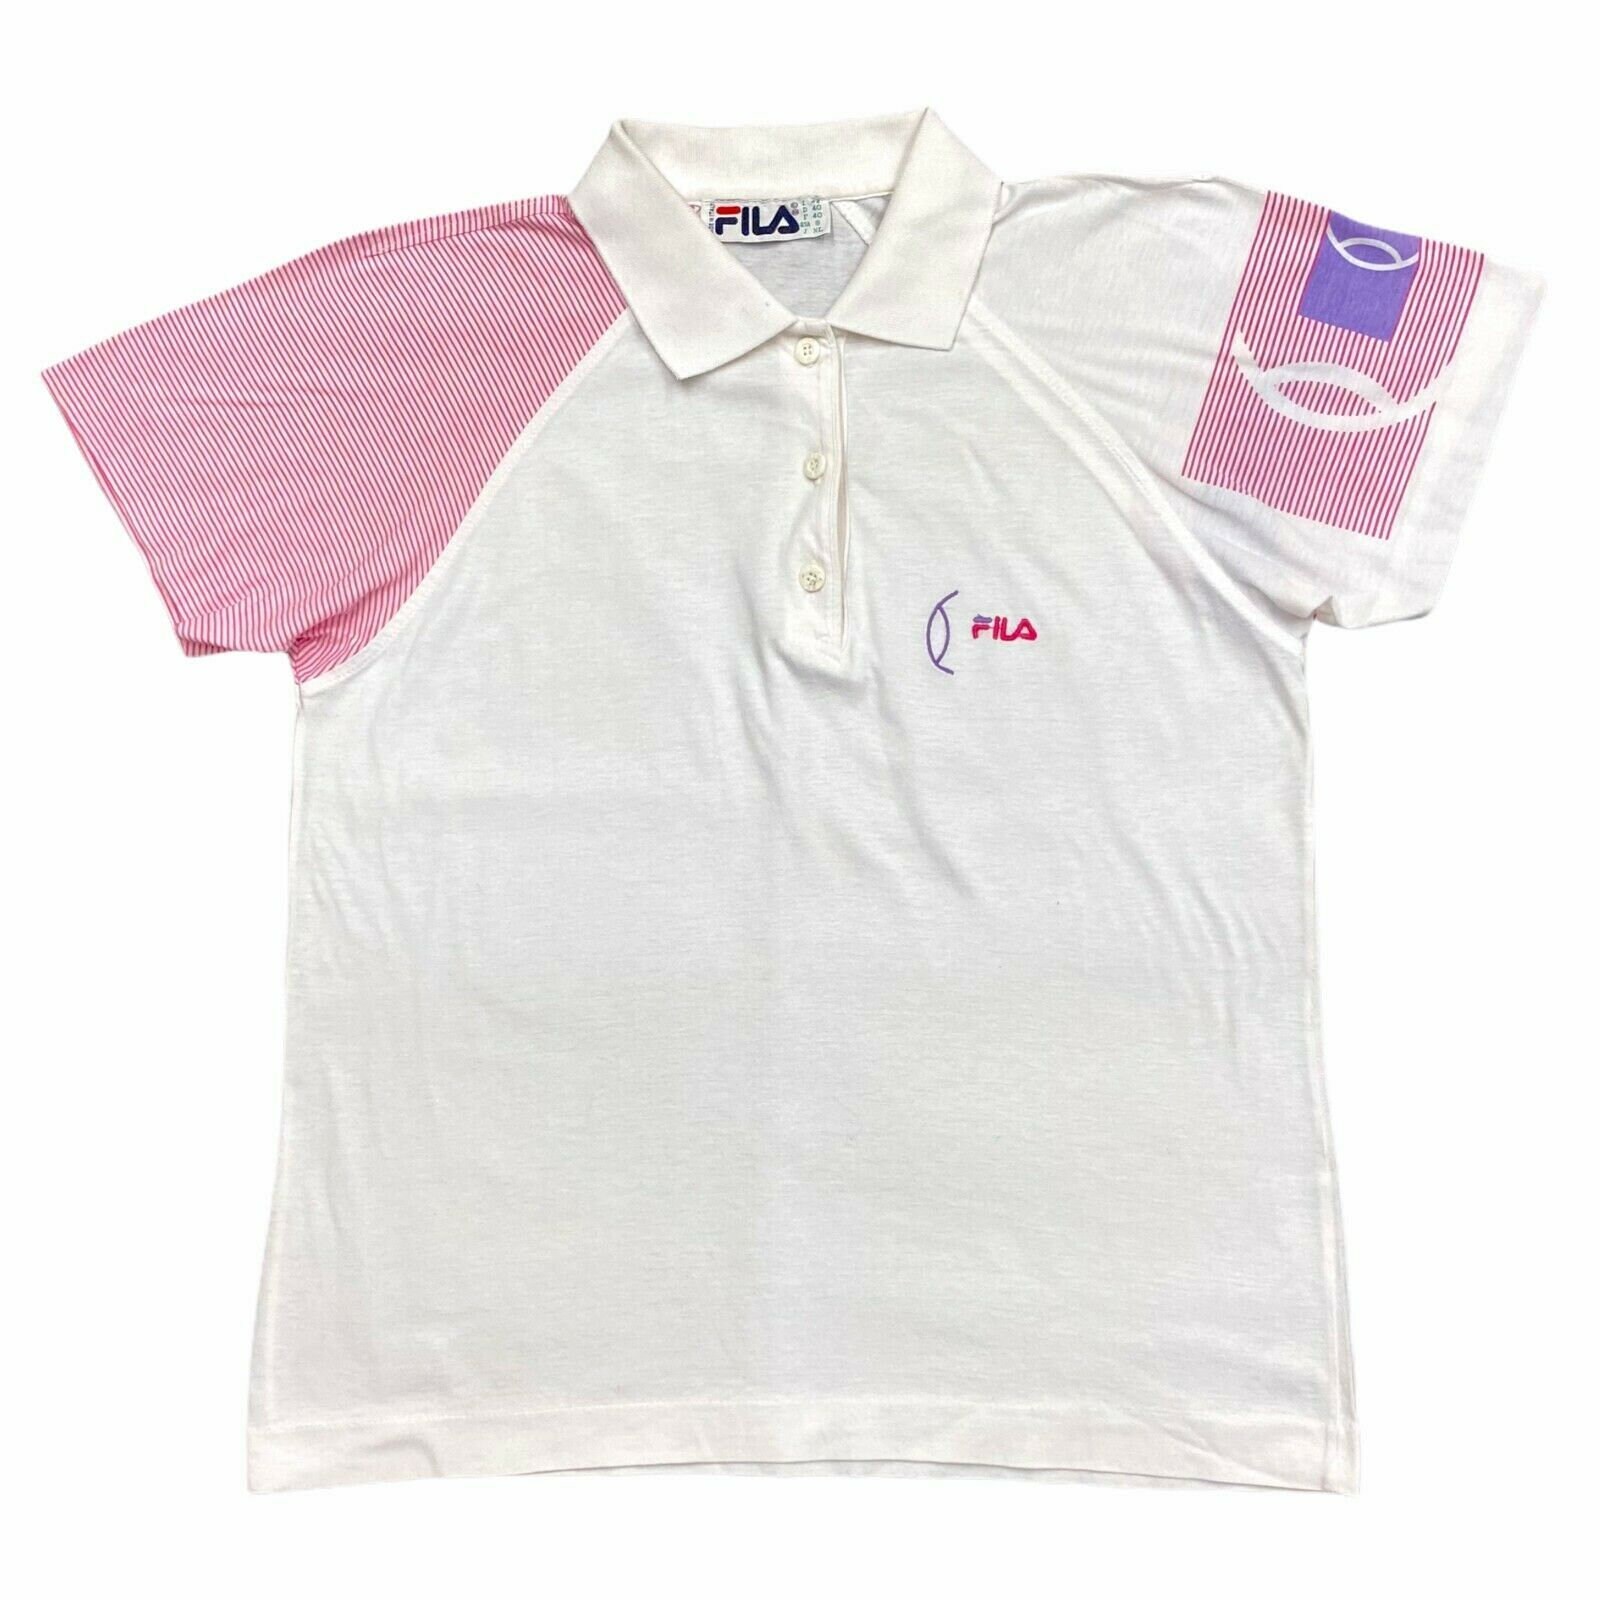 Inde Rosefarve Effektivitet Fila Womens Polo Shirt Vintage 90s Retro Tennis Sportswear - Etsy